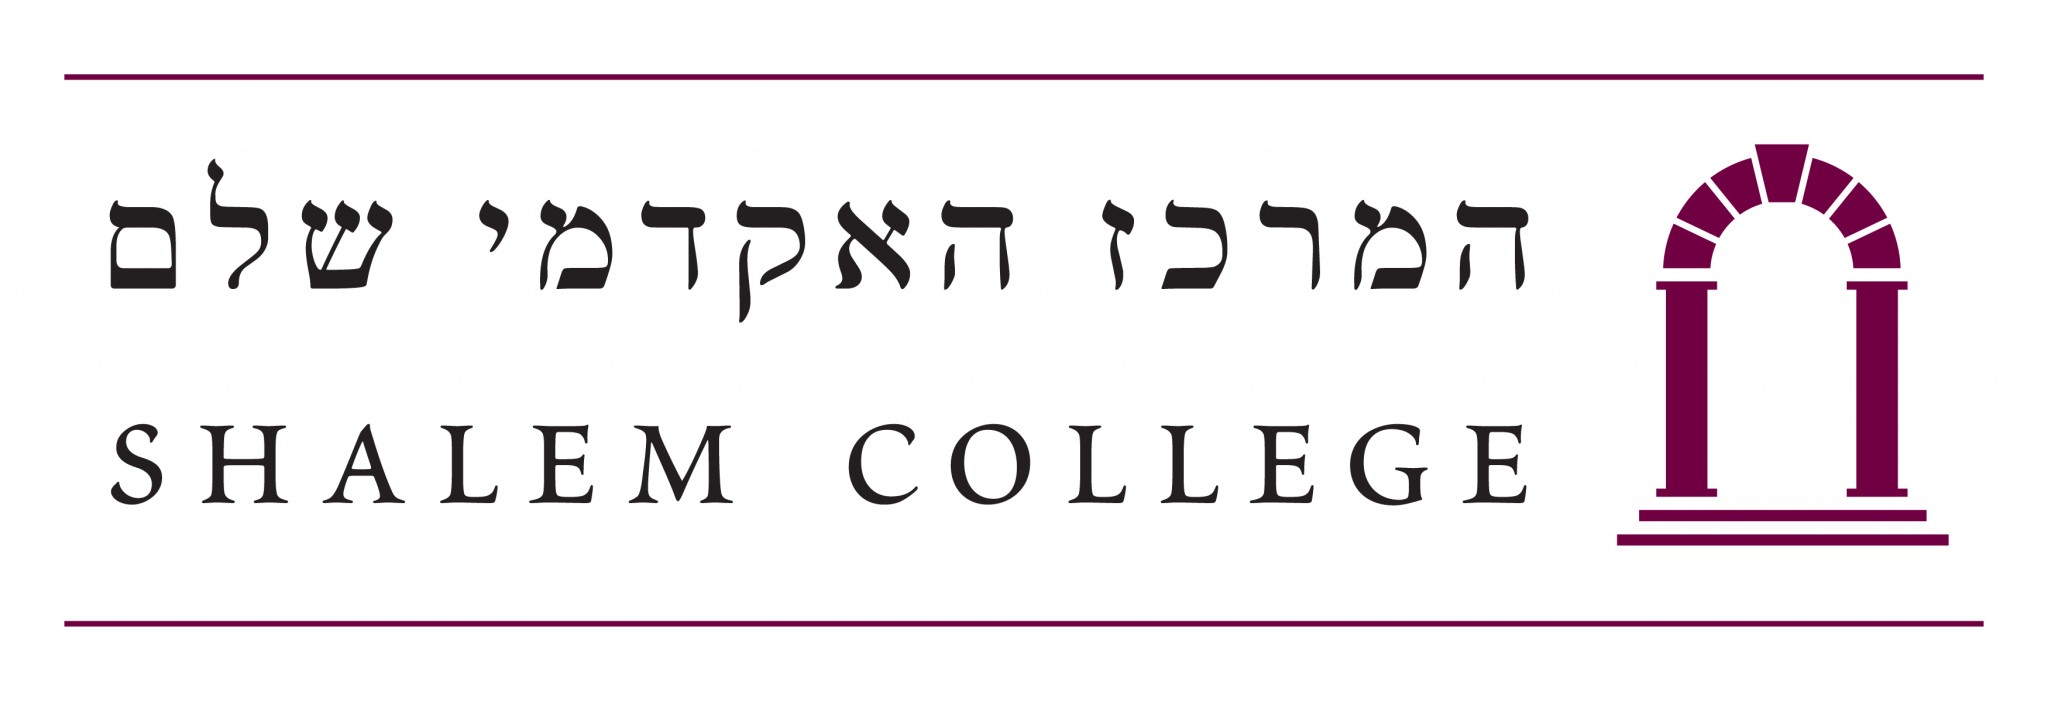 shalem-college-logo